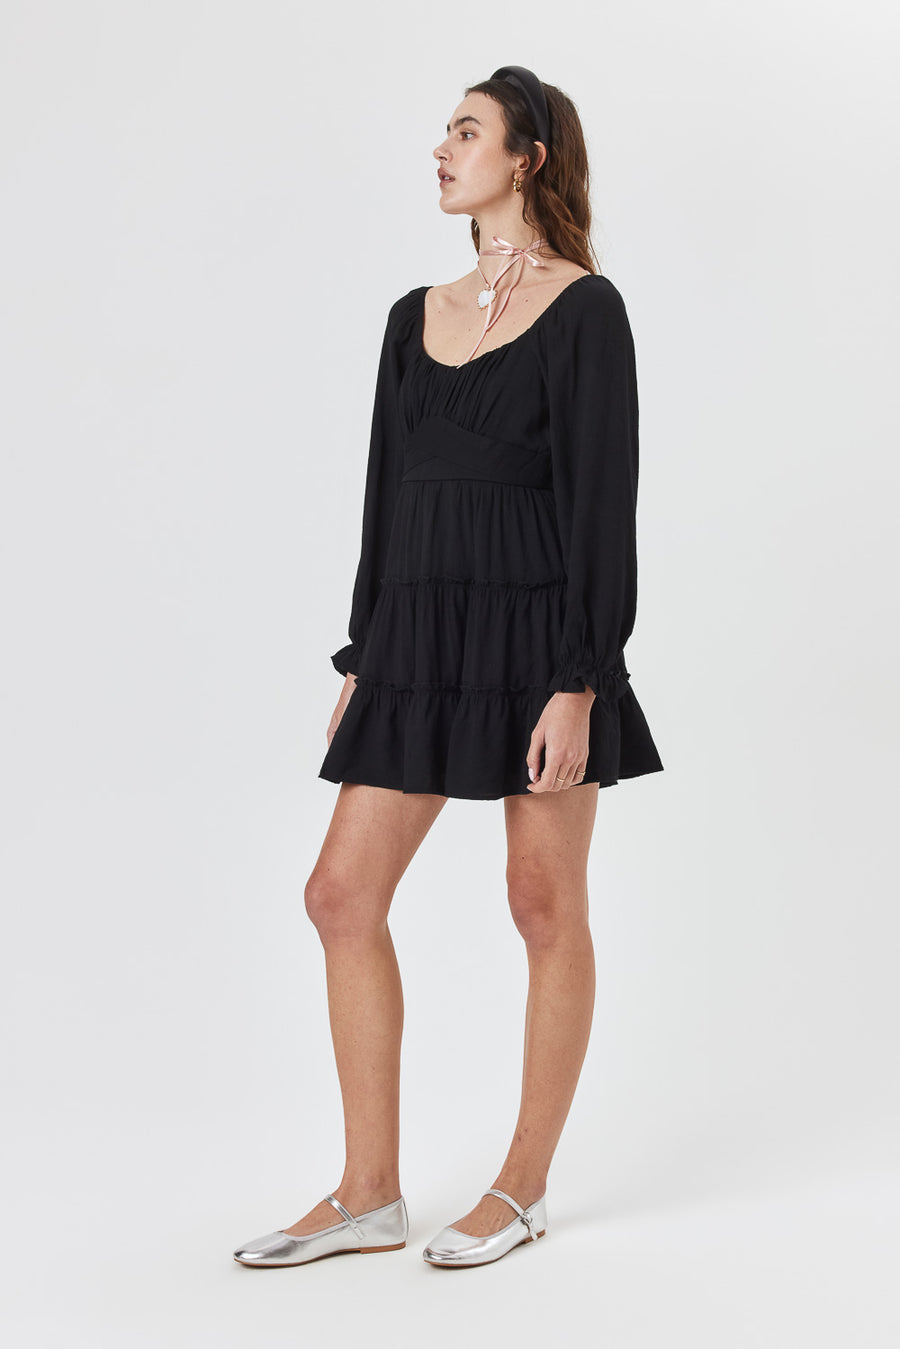 Black Long Sleeve Emma Dress - Trixxi Clothing